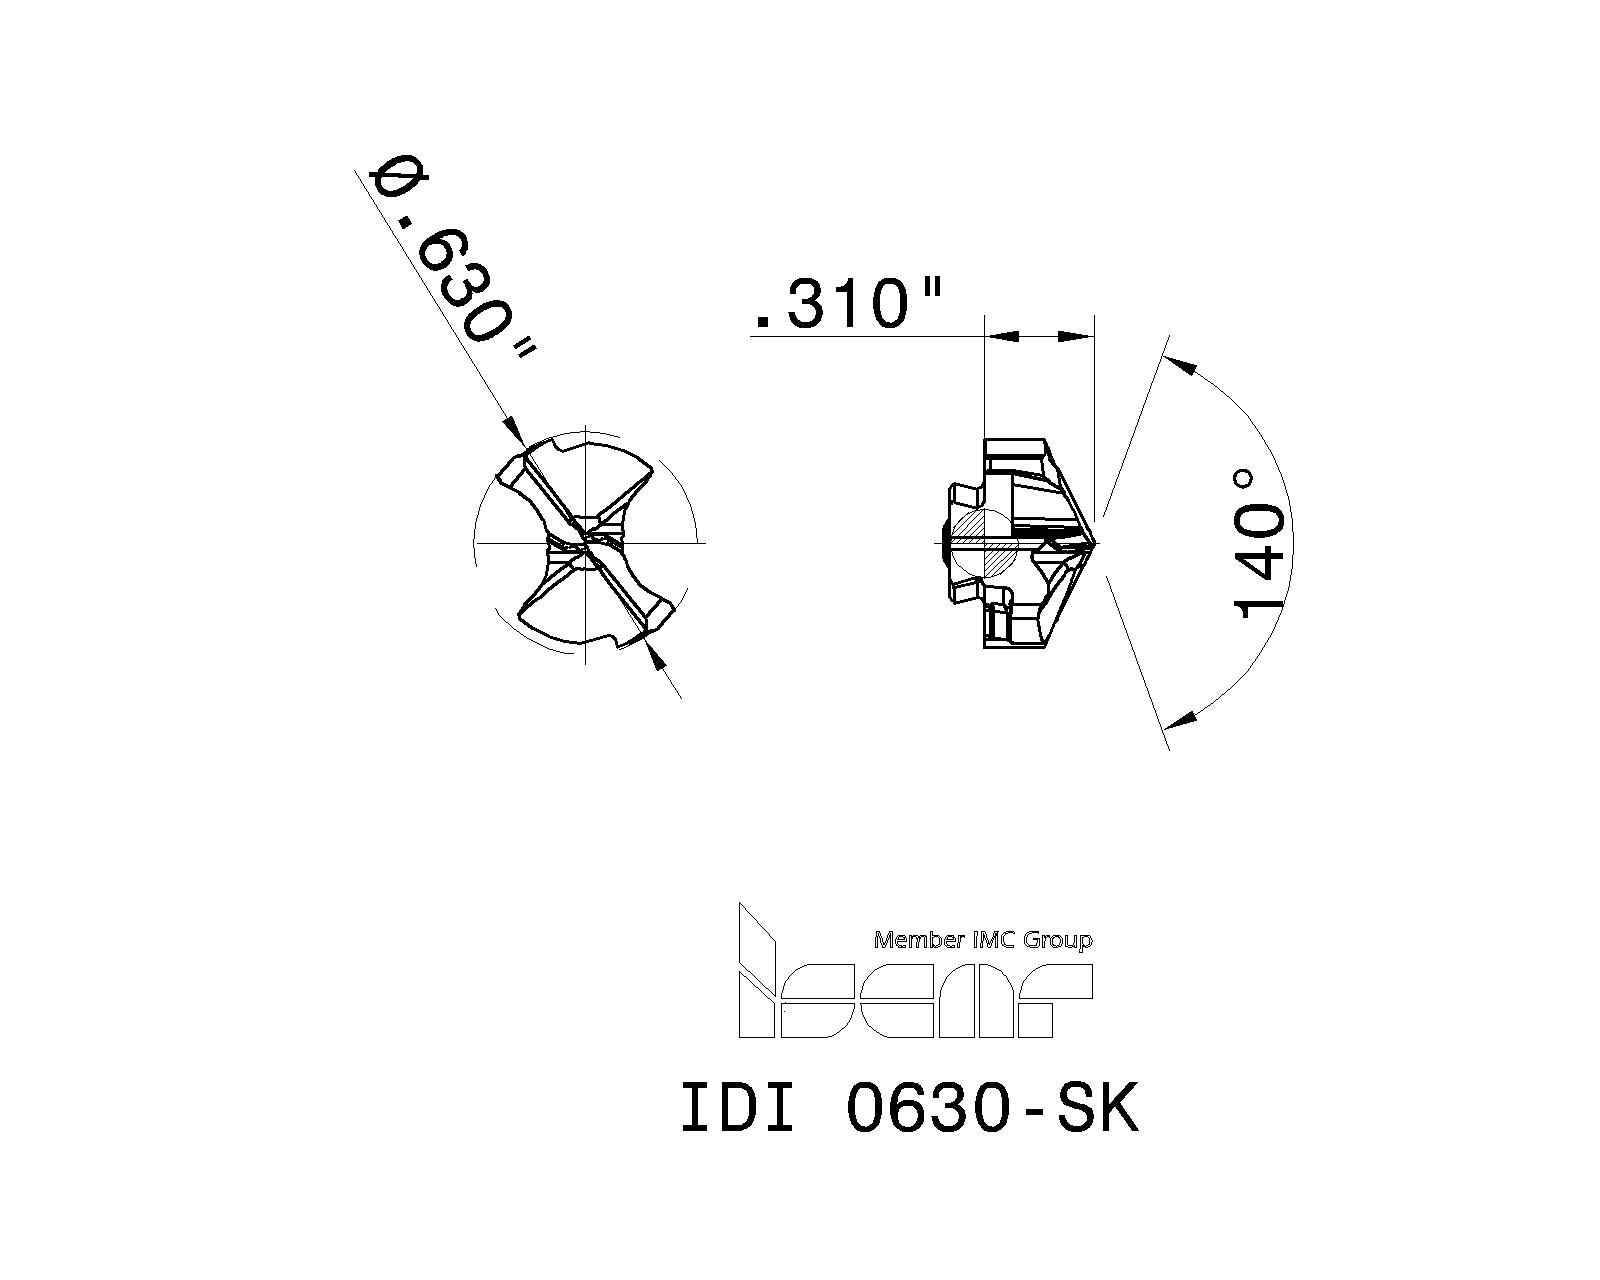 2 x Iscar Drillbits Chamdrill Idi 160-sk Ic908 0630-sk Core Bit Carbide Inserts